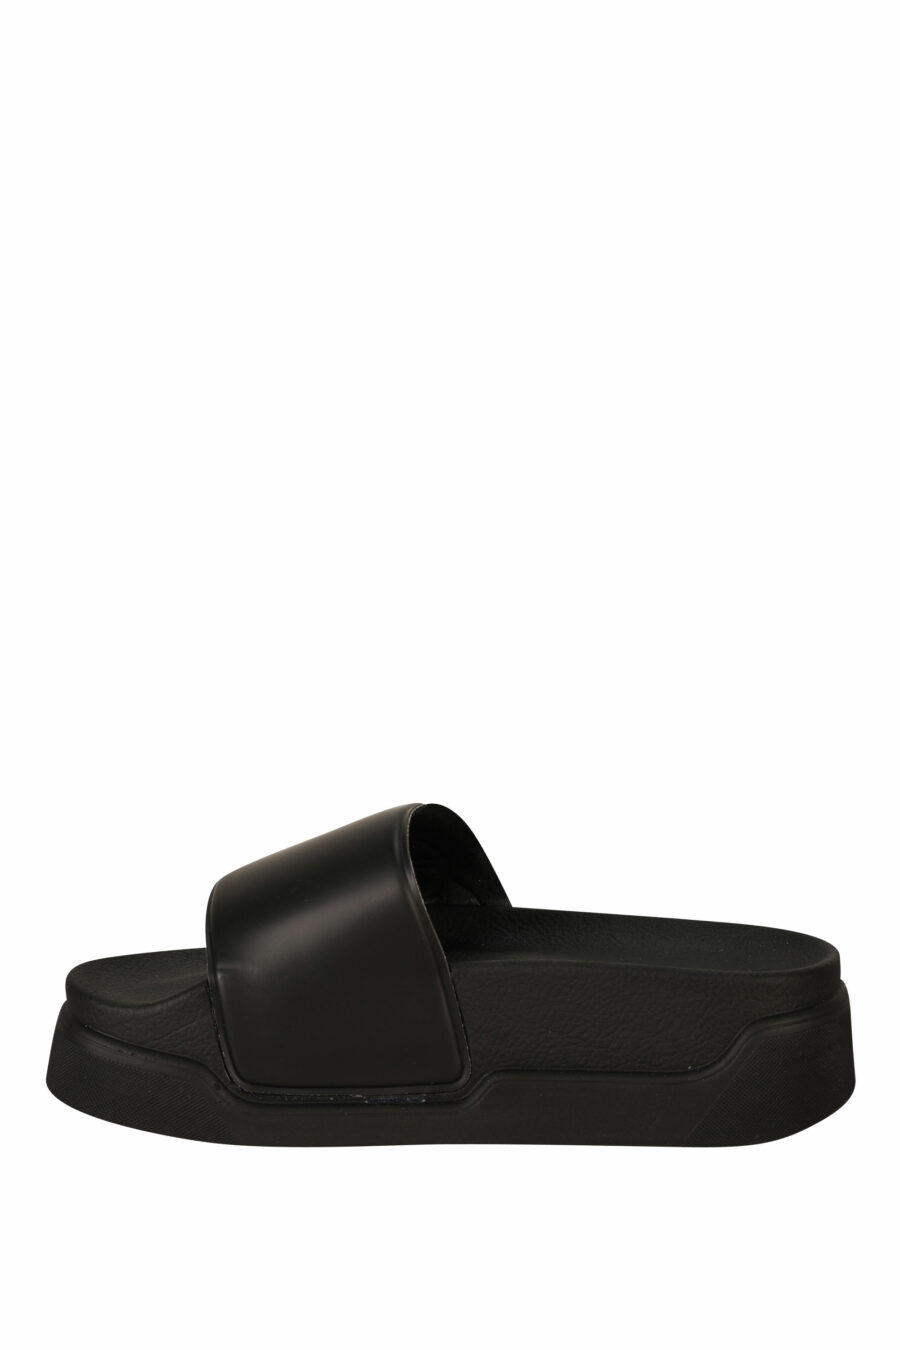 Sandales à plateforme noires avec logo "karl" - 5059529404771 2